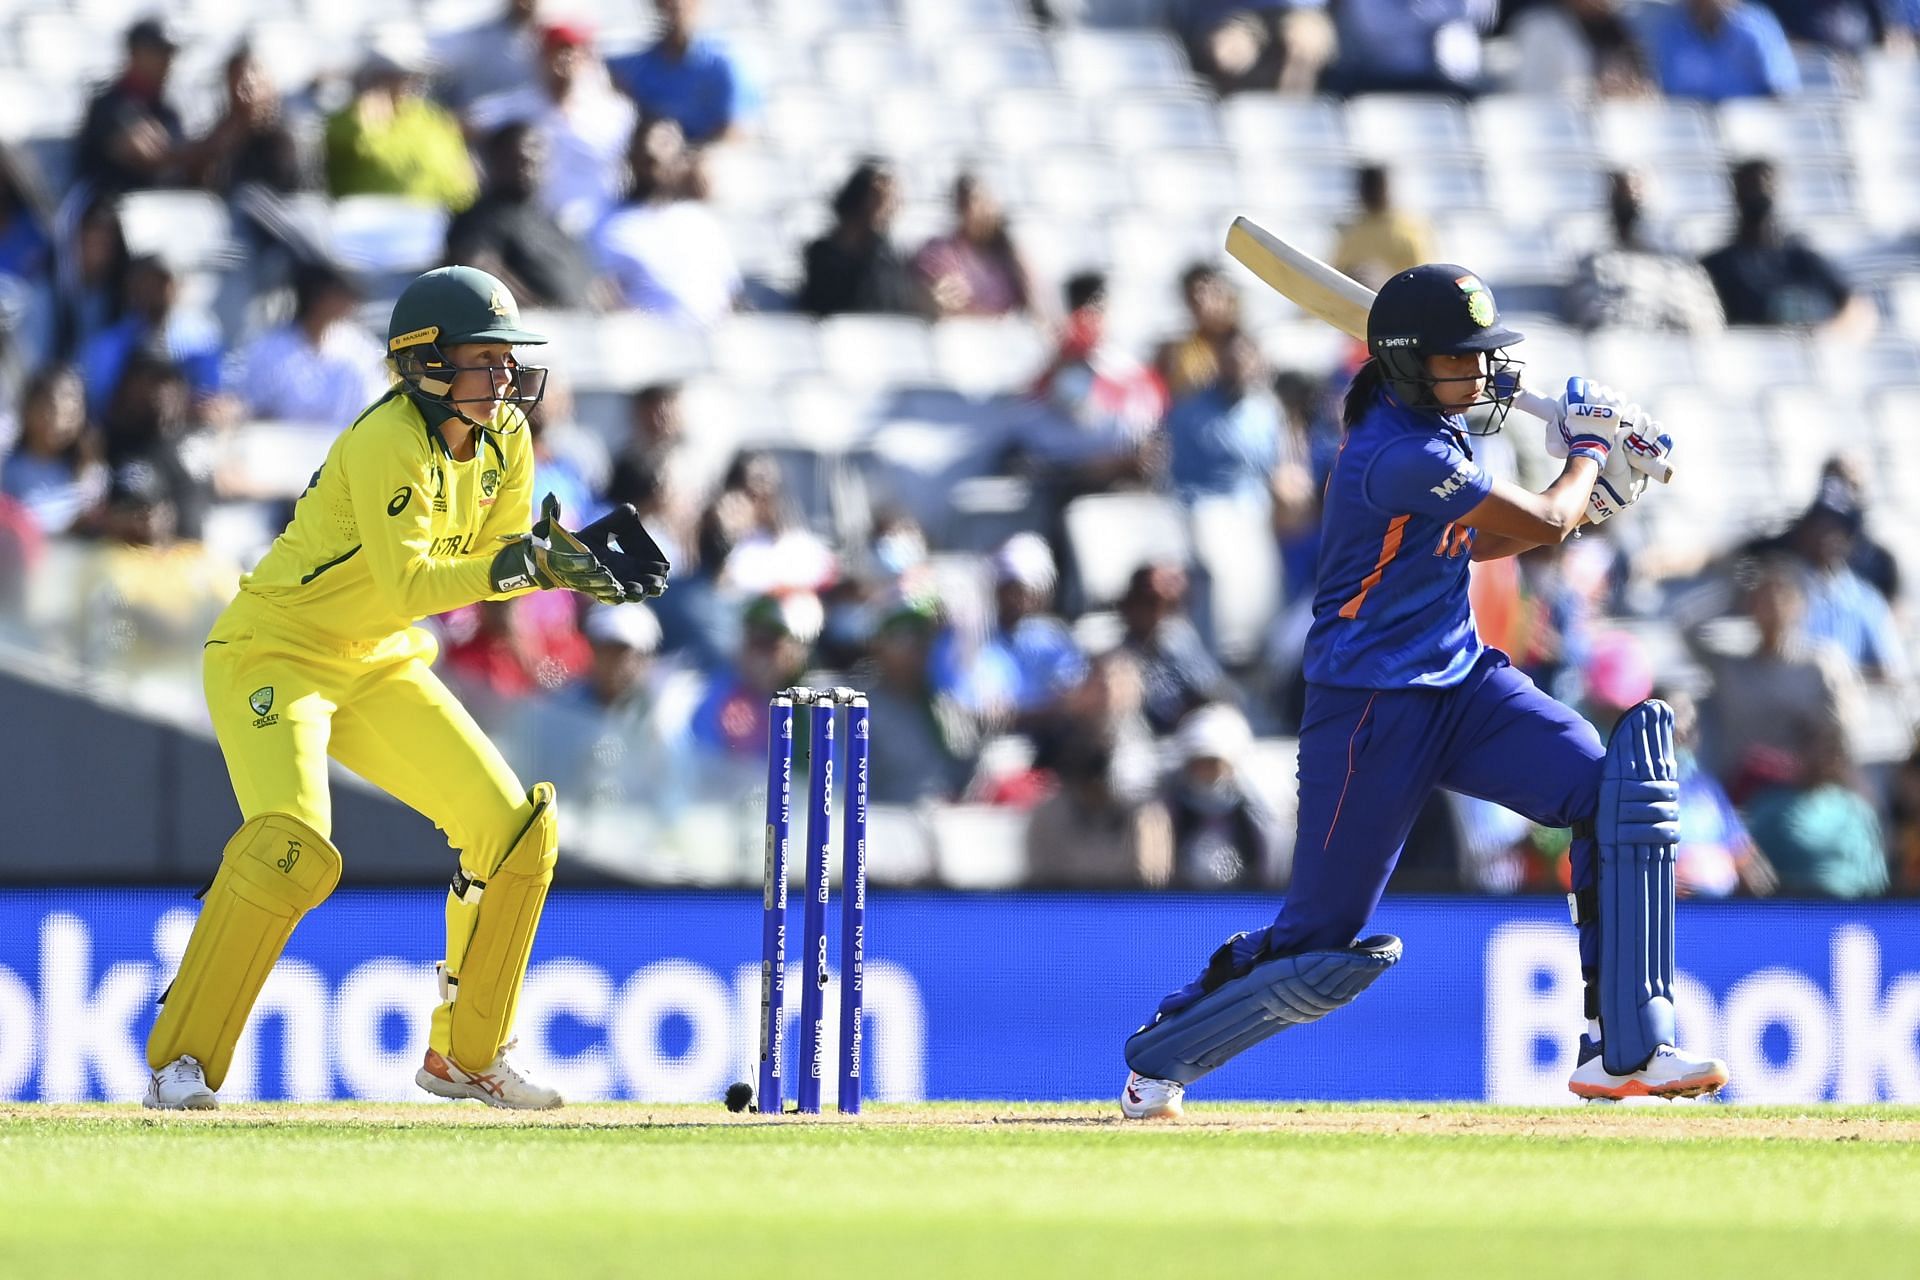 Harmanpreet Kaur scored a blazing half-century against Australia.